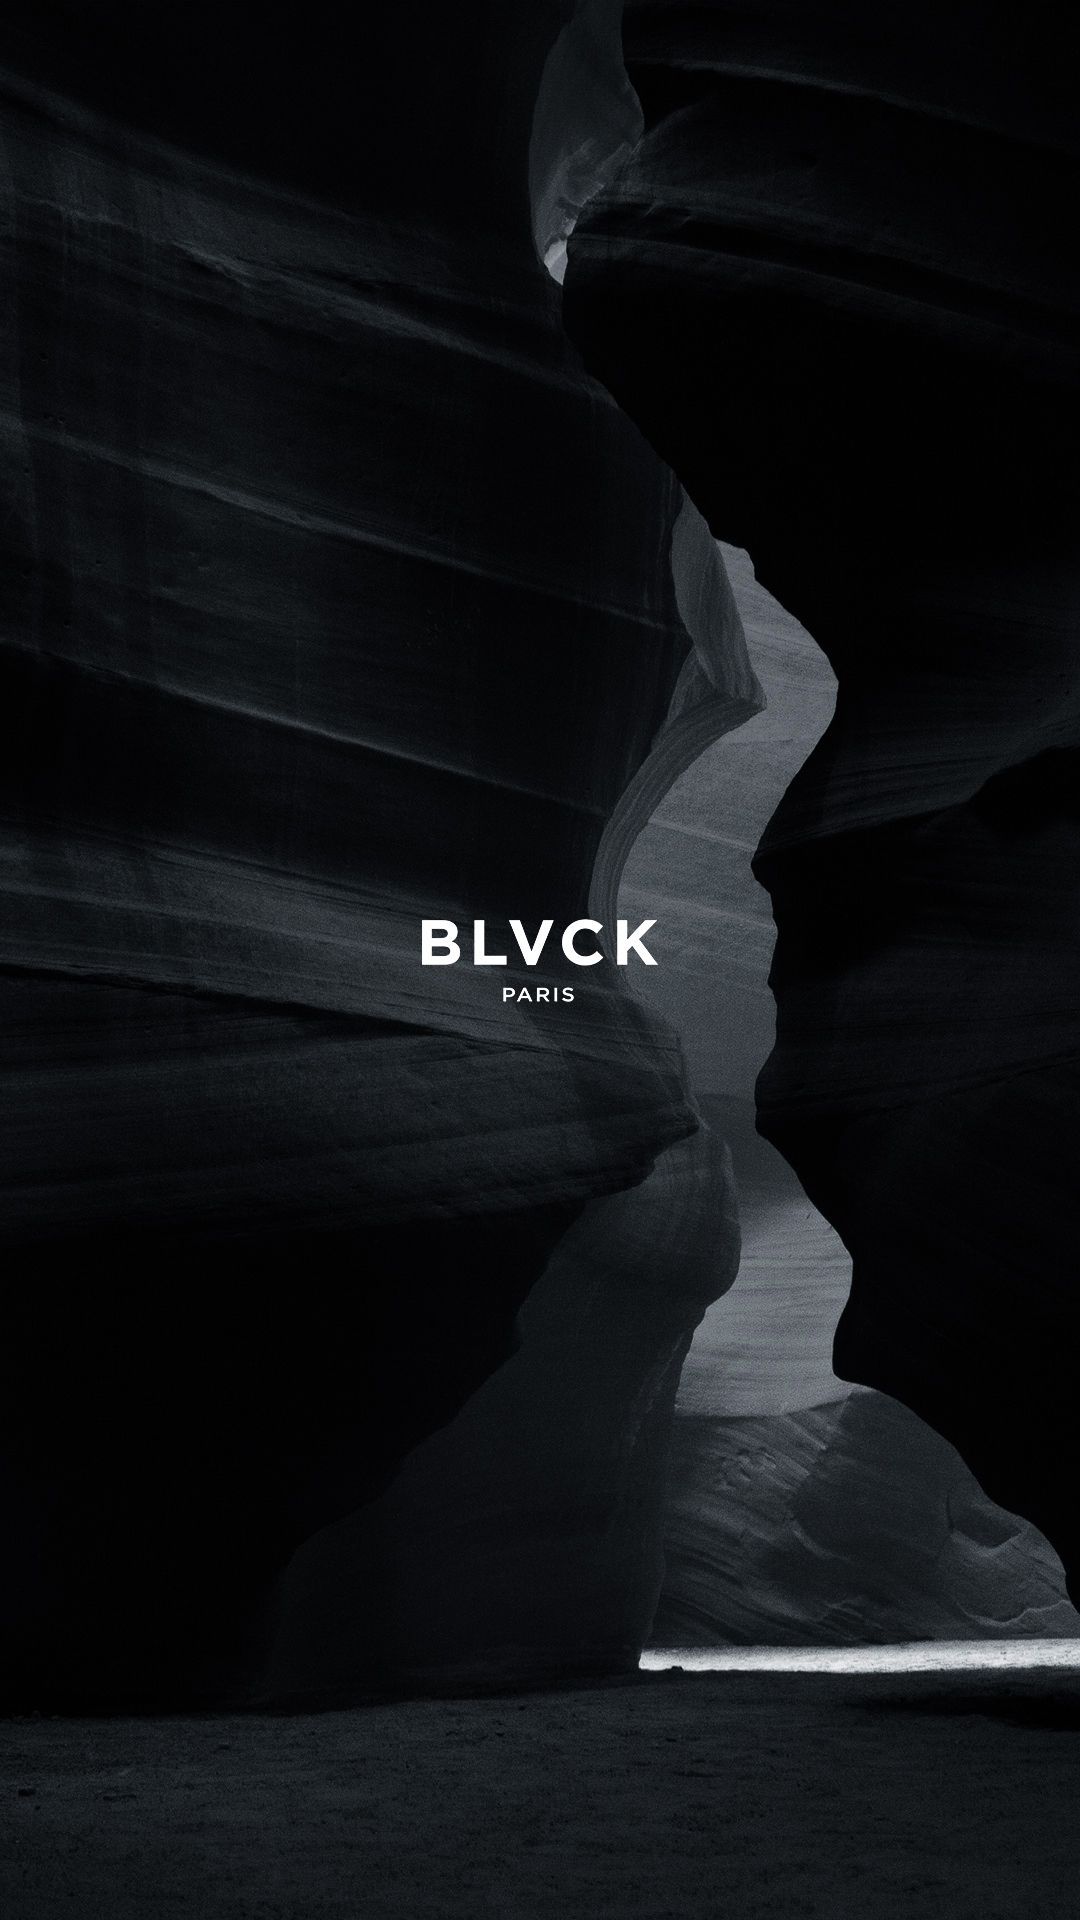 BLVCK Wallpapers - Wallpaper Cave